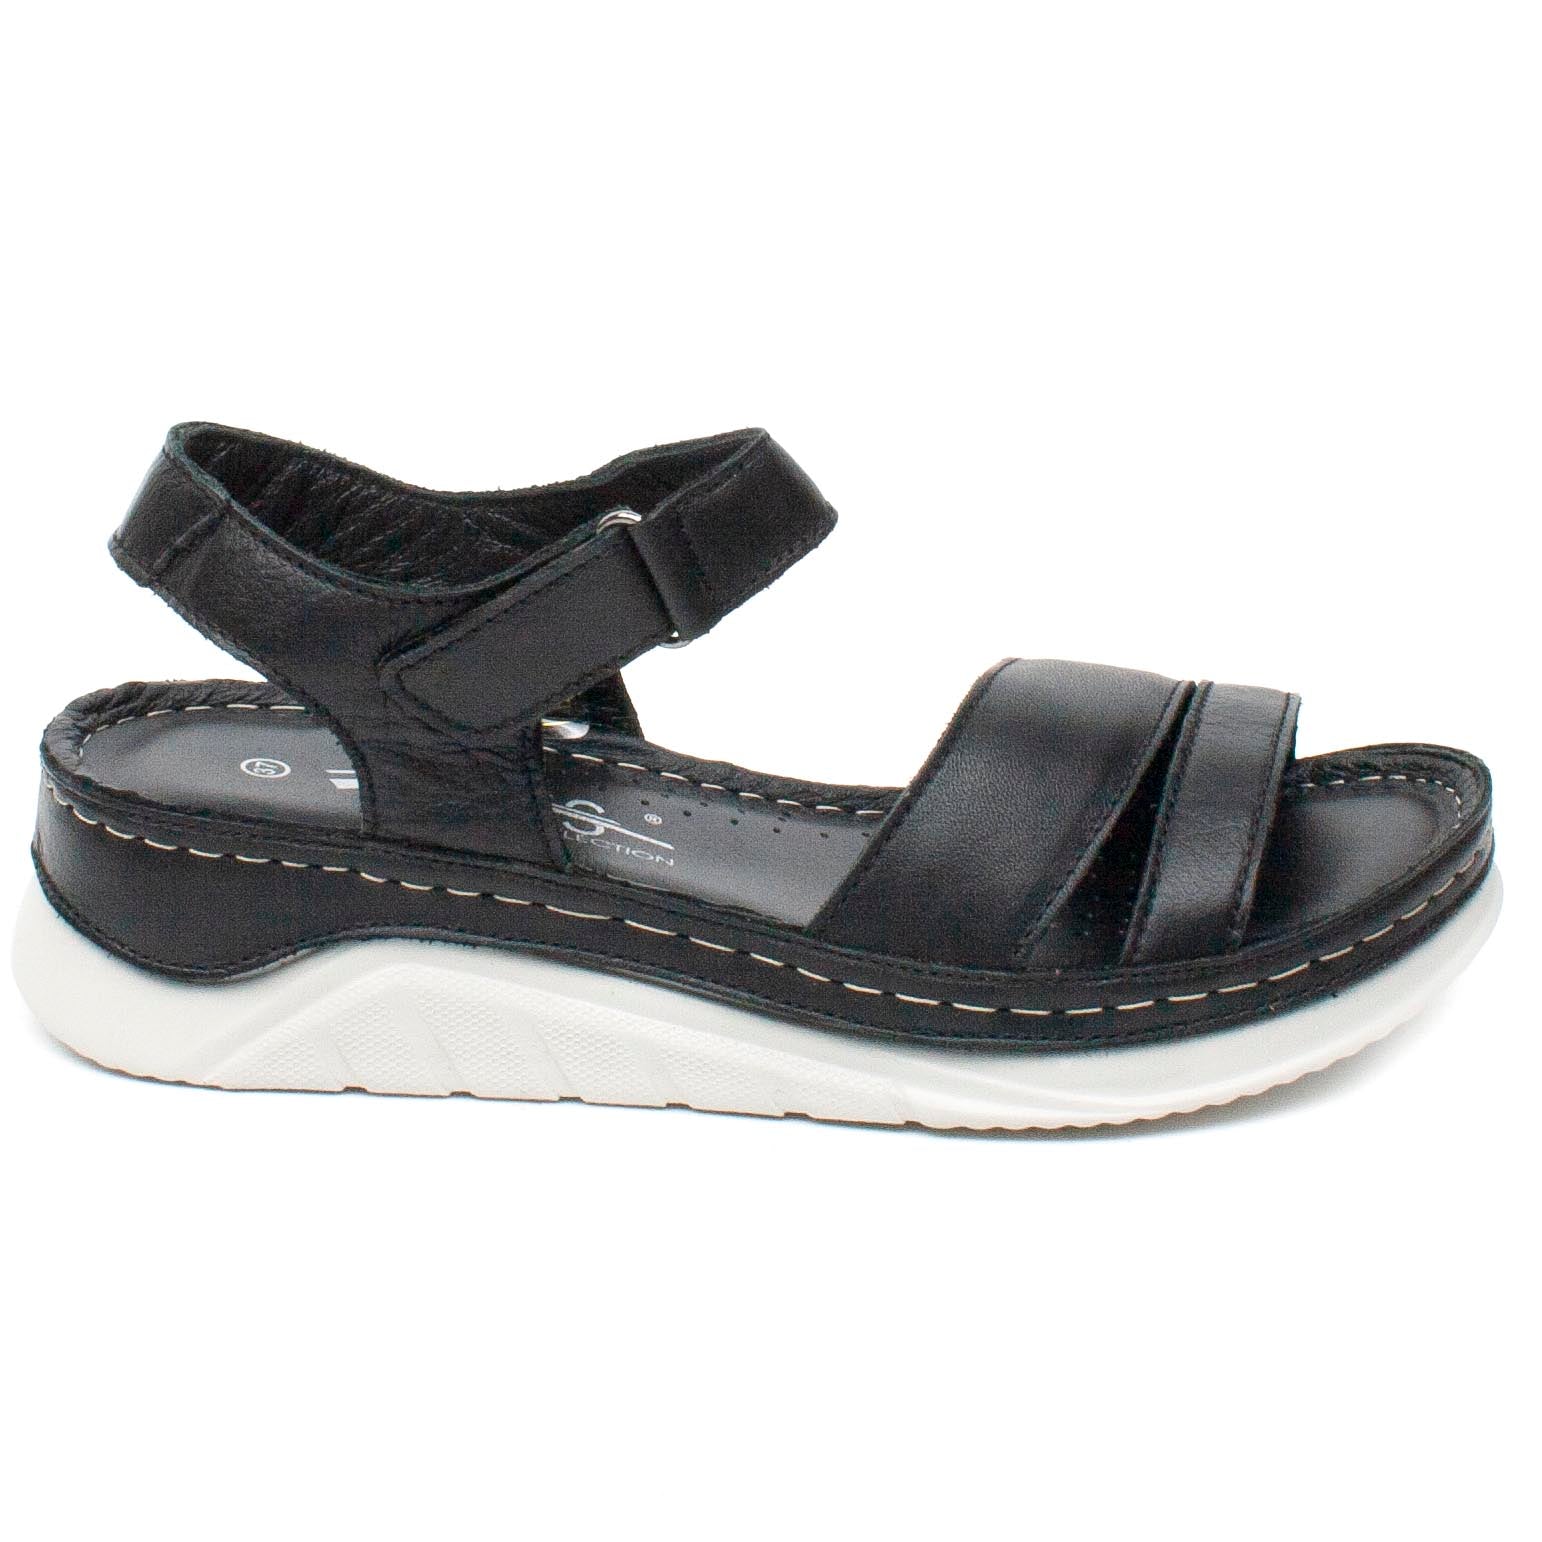 Pass Collection sandale dama O72959 01 N negru ID2530-NG